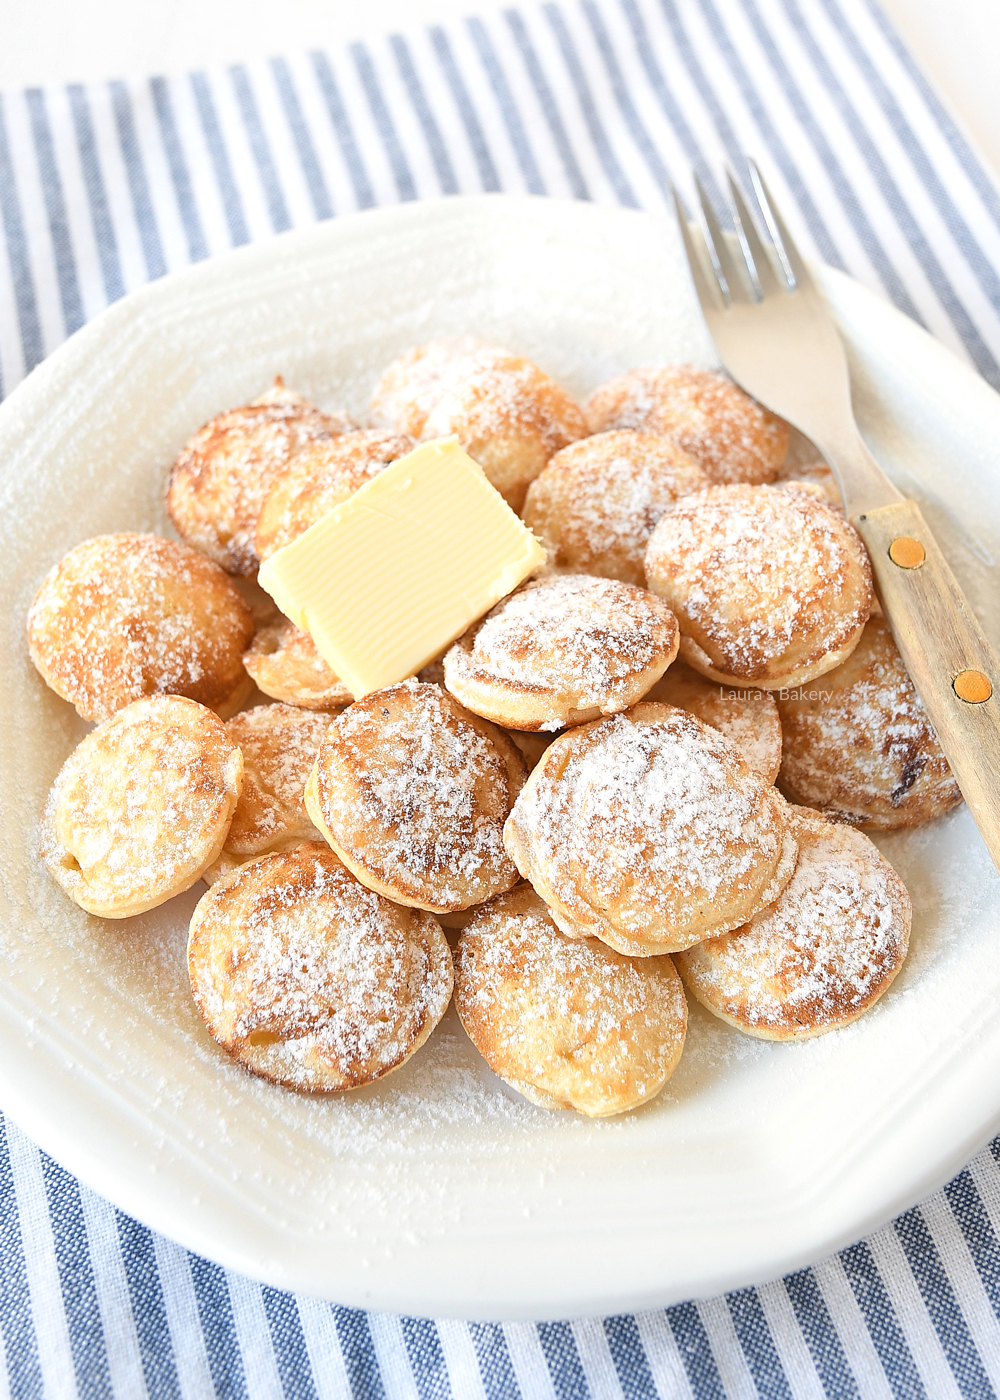 Easy Dutch mini pancakes recipe (poffertjes) – No Yeast